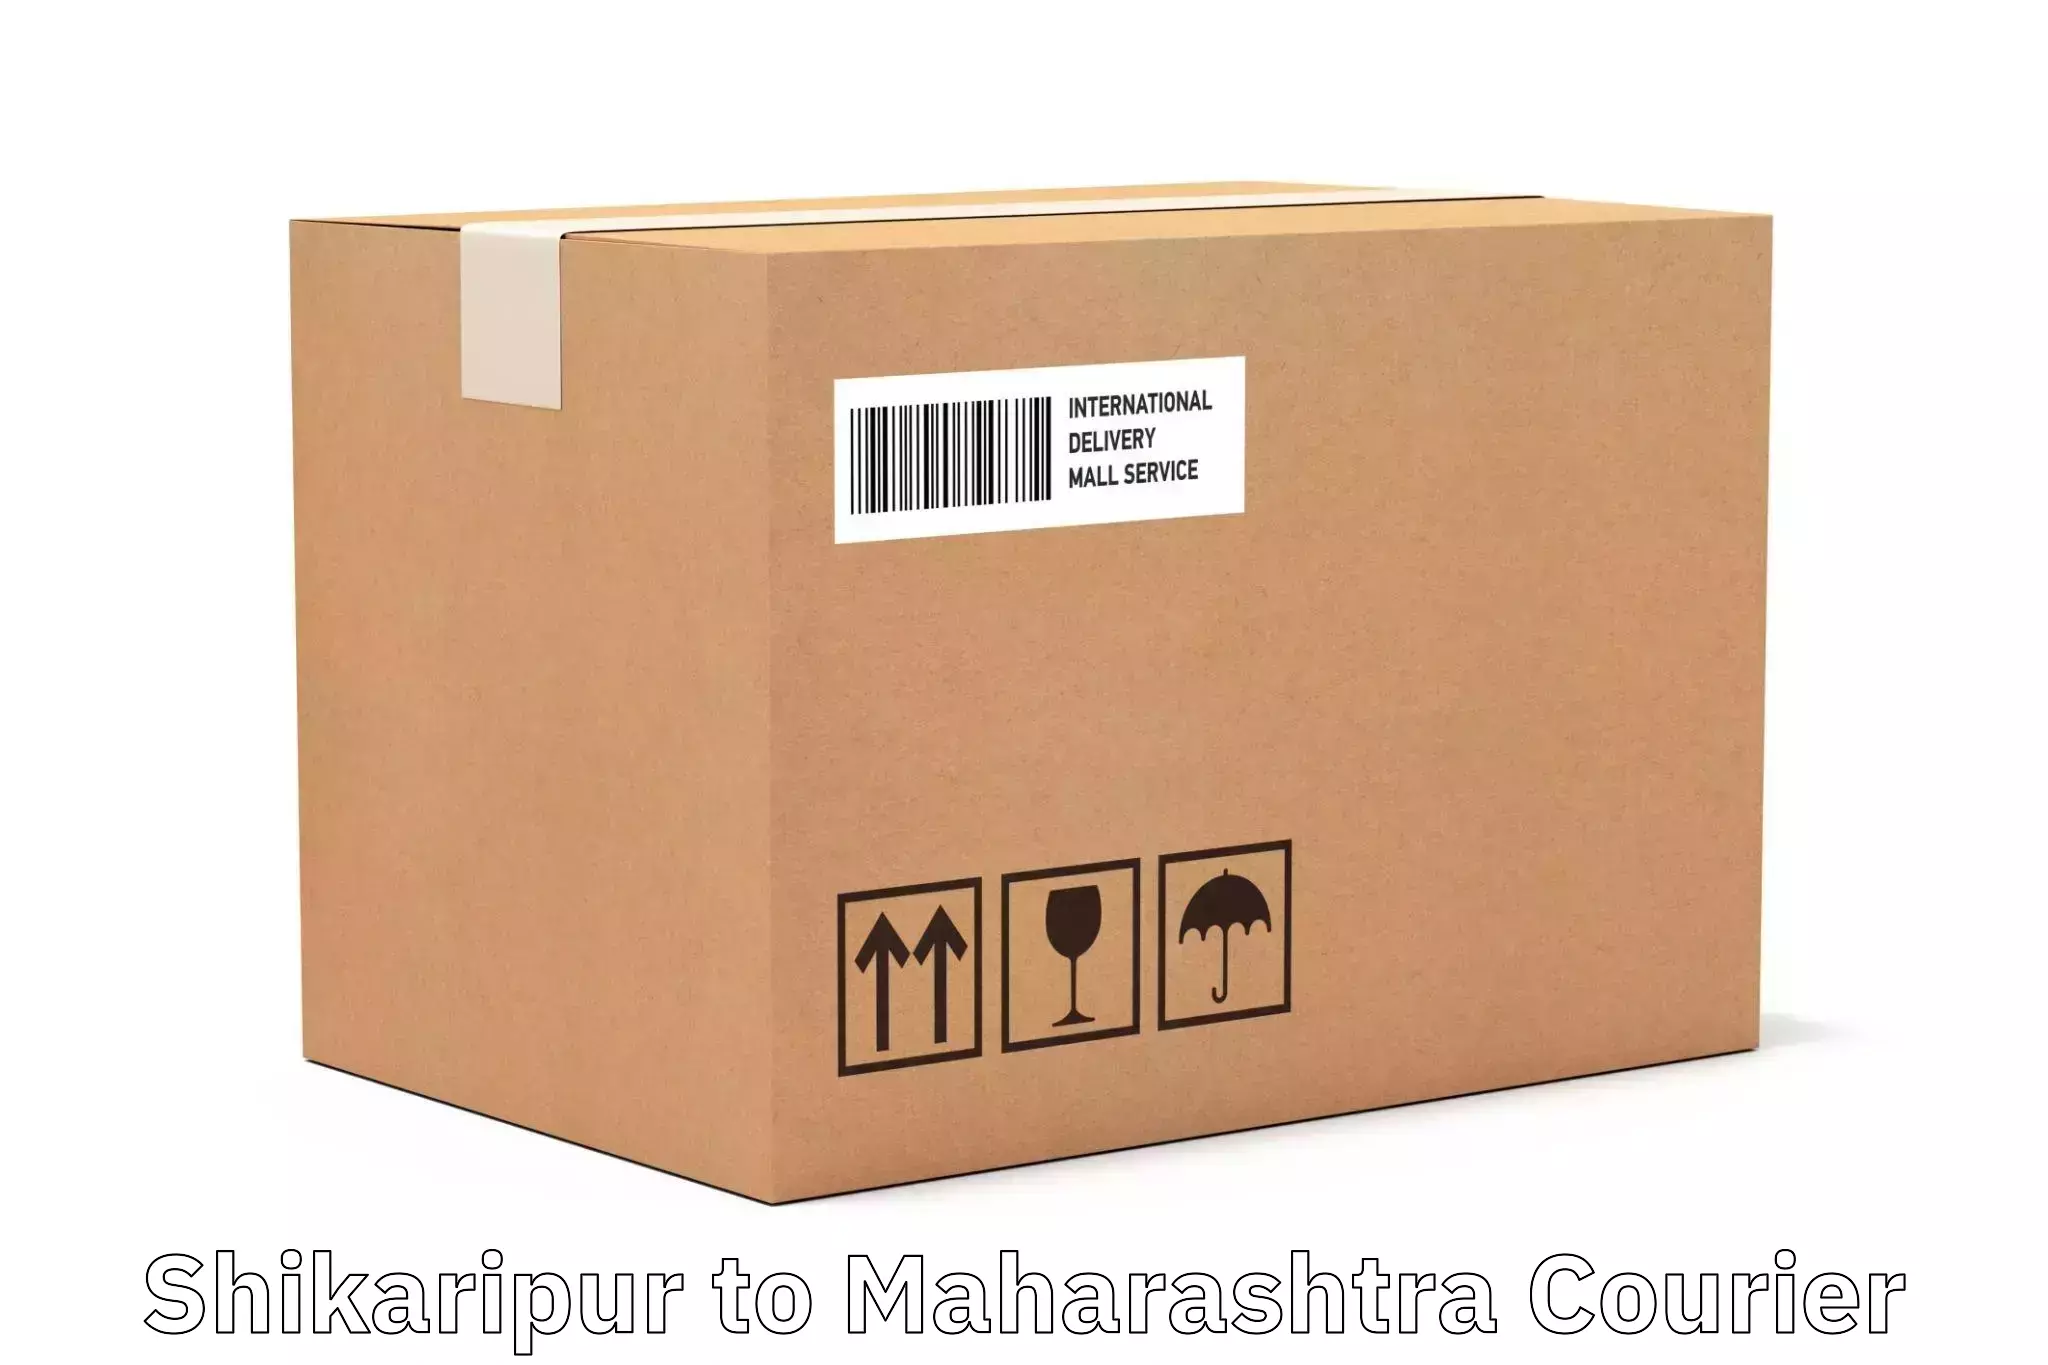 Express courier facilities Shikaripur to Panvel